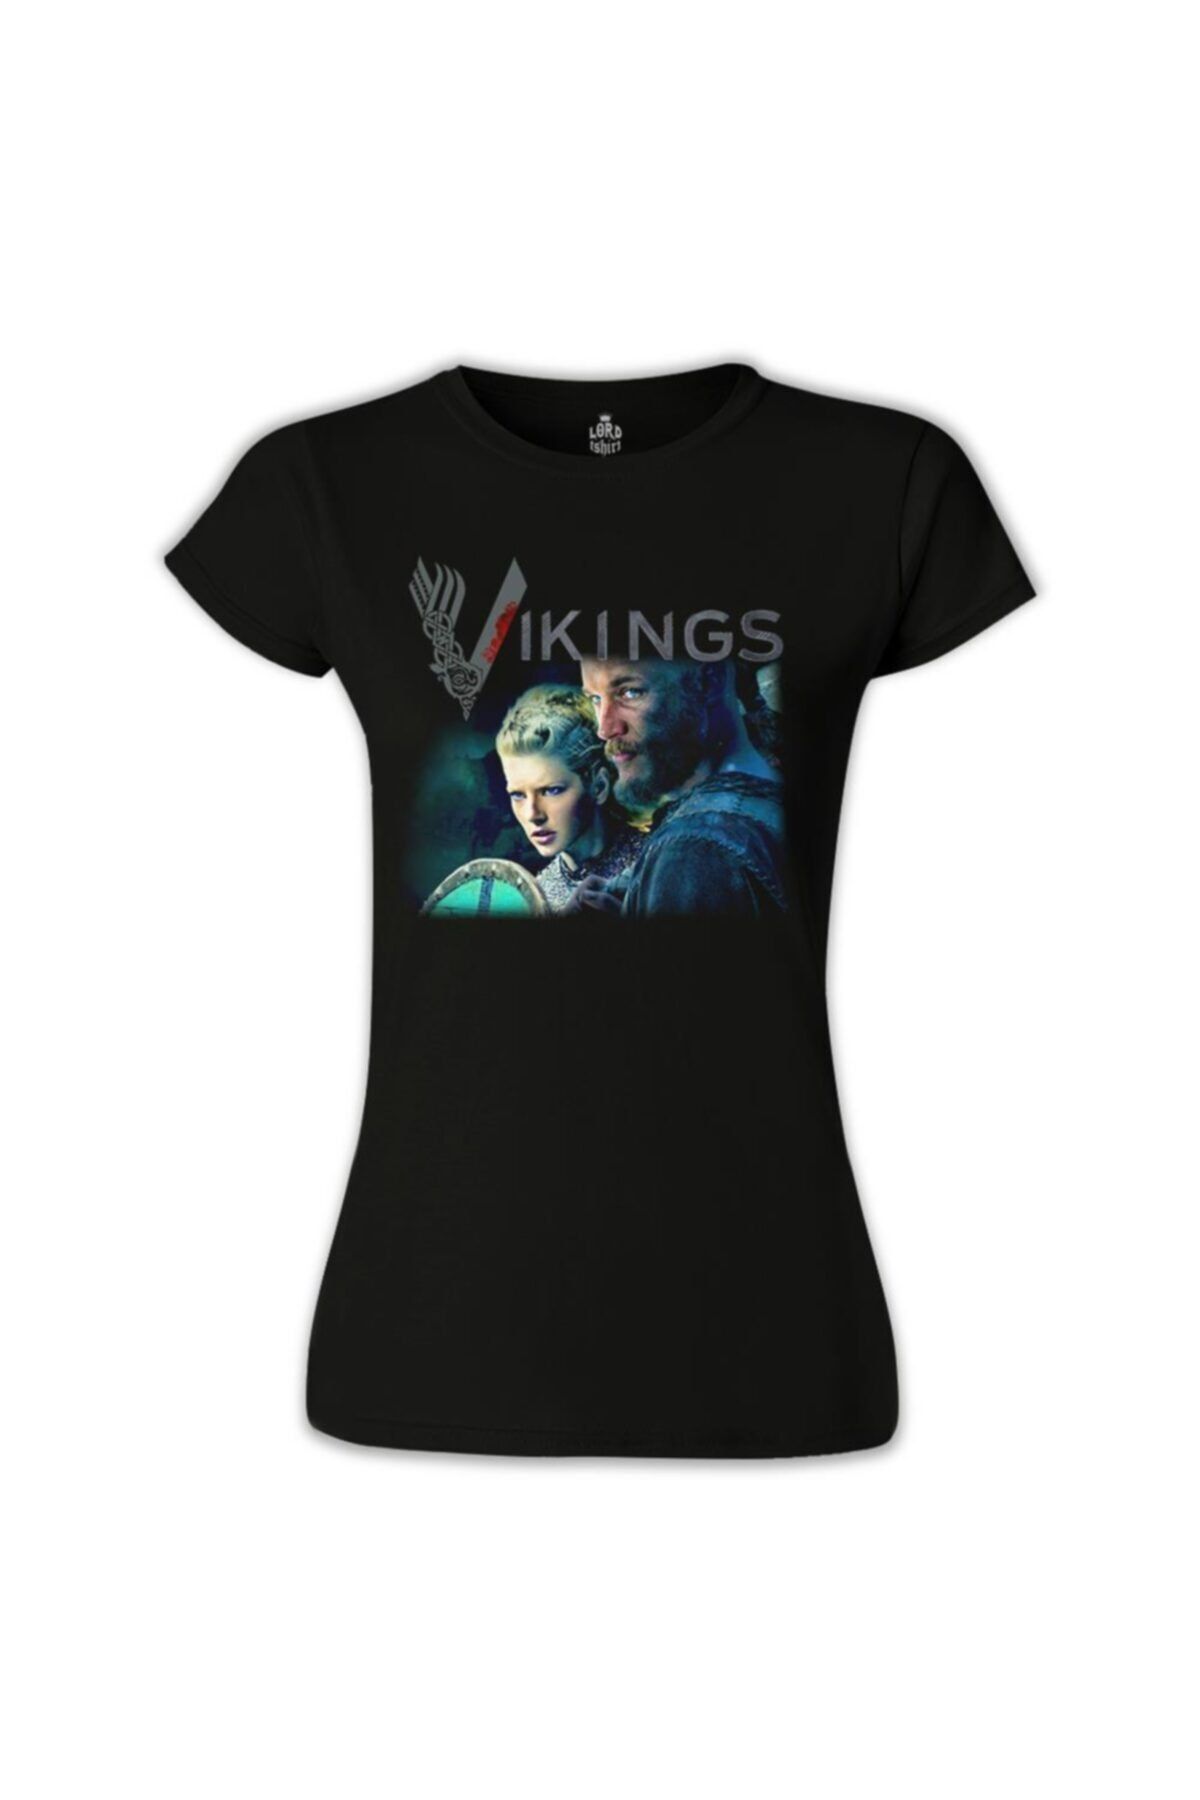 Lord T-Shirt Kadın Siyah Vikings - Ragnar & Lagertha Tshirt - bs-859